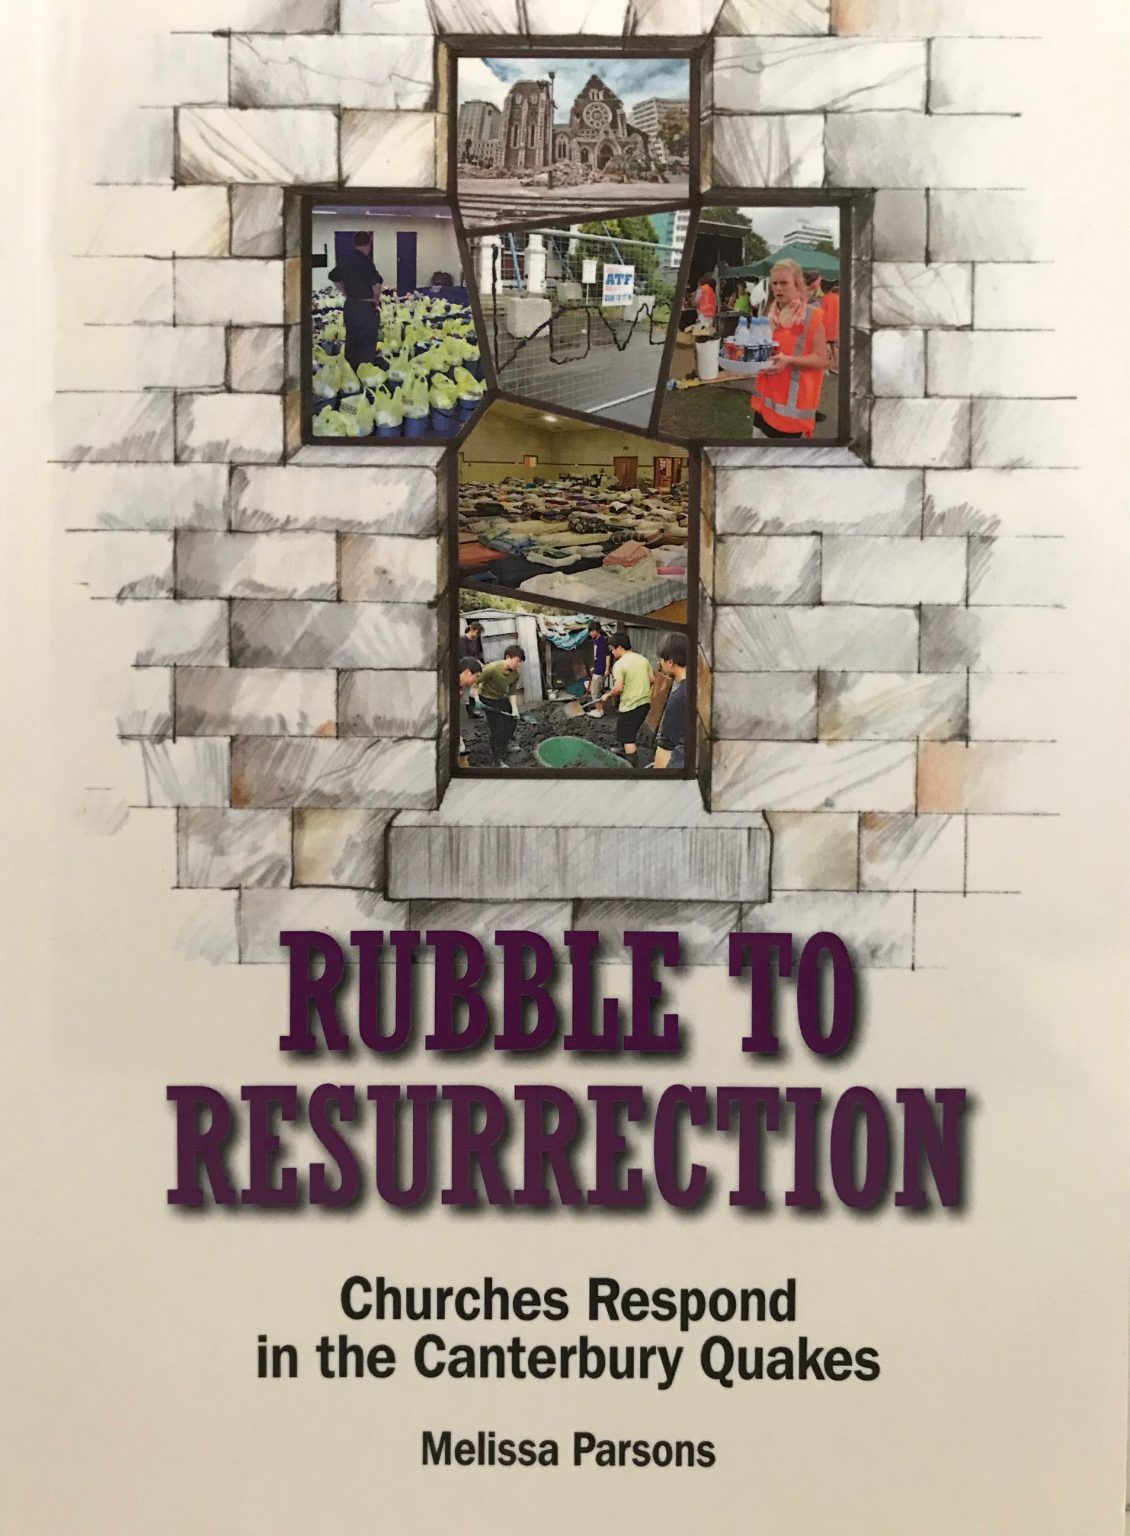 RUBBLE TO RESURRECTION: Churches Respond in the Canterbury Quakes